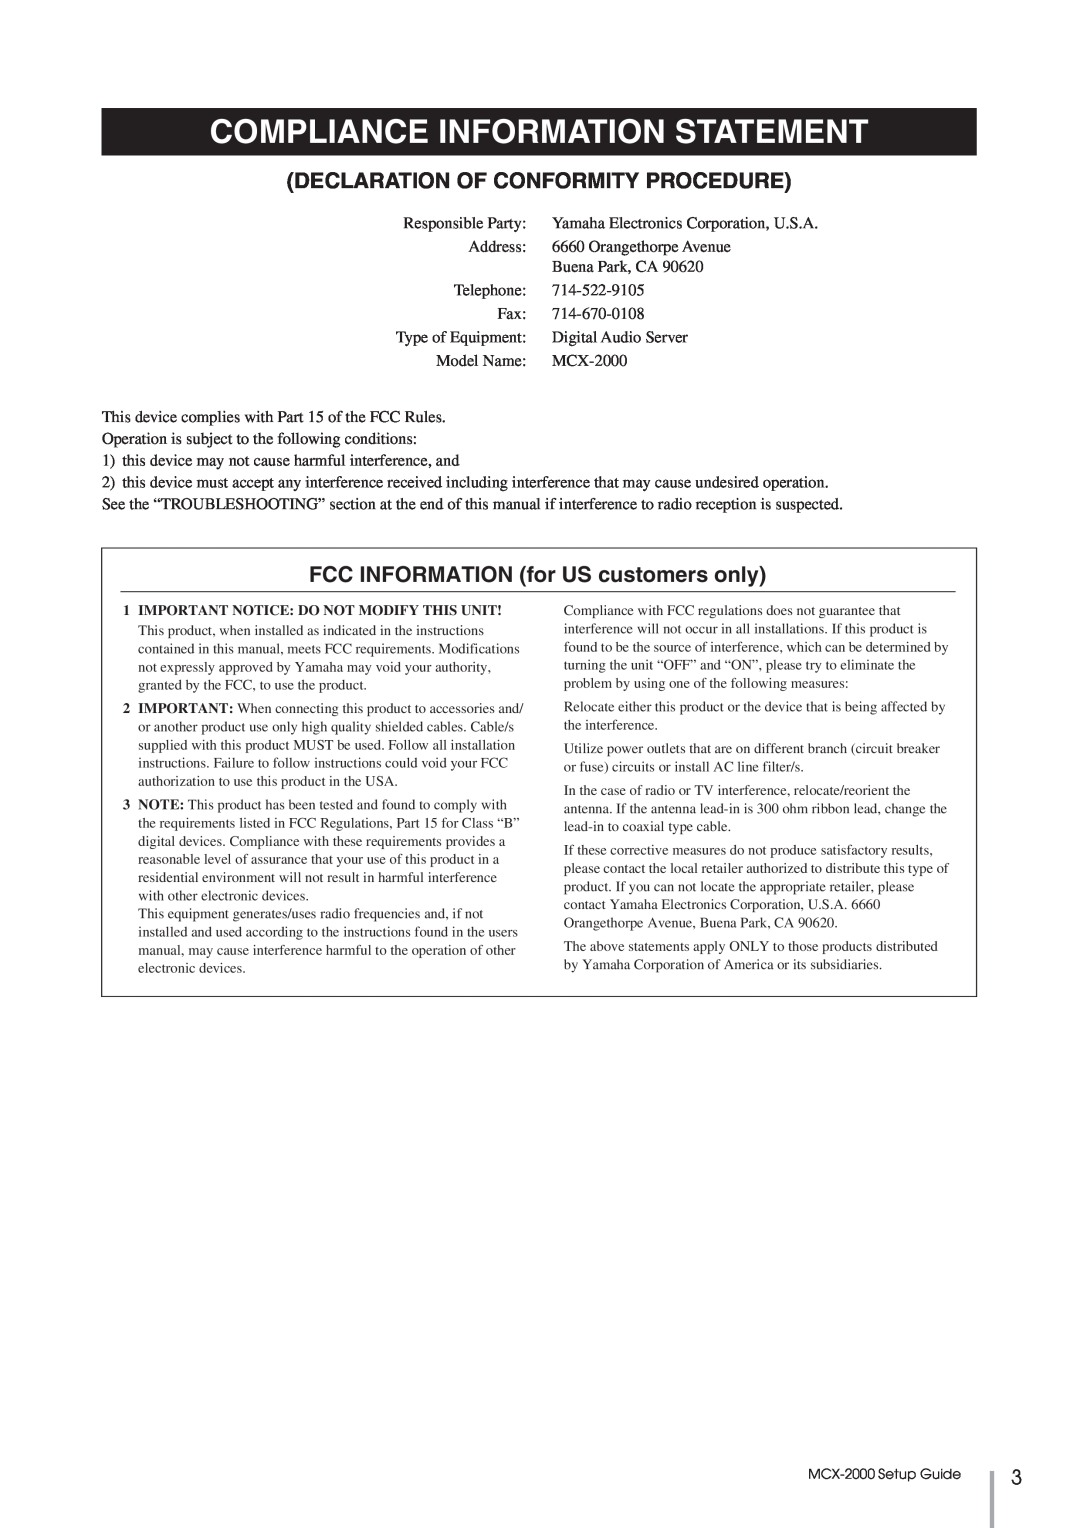 Yamaha MCX-2000 setup guide Compliance Information Statement, Declaration Of Conformity Procedure 